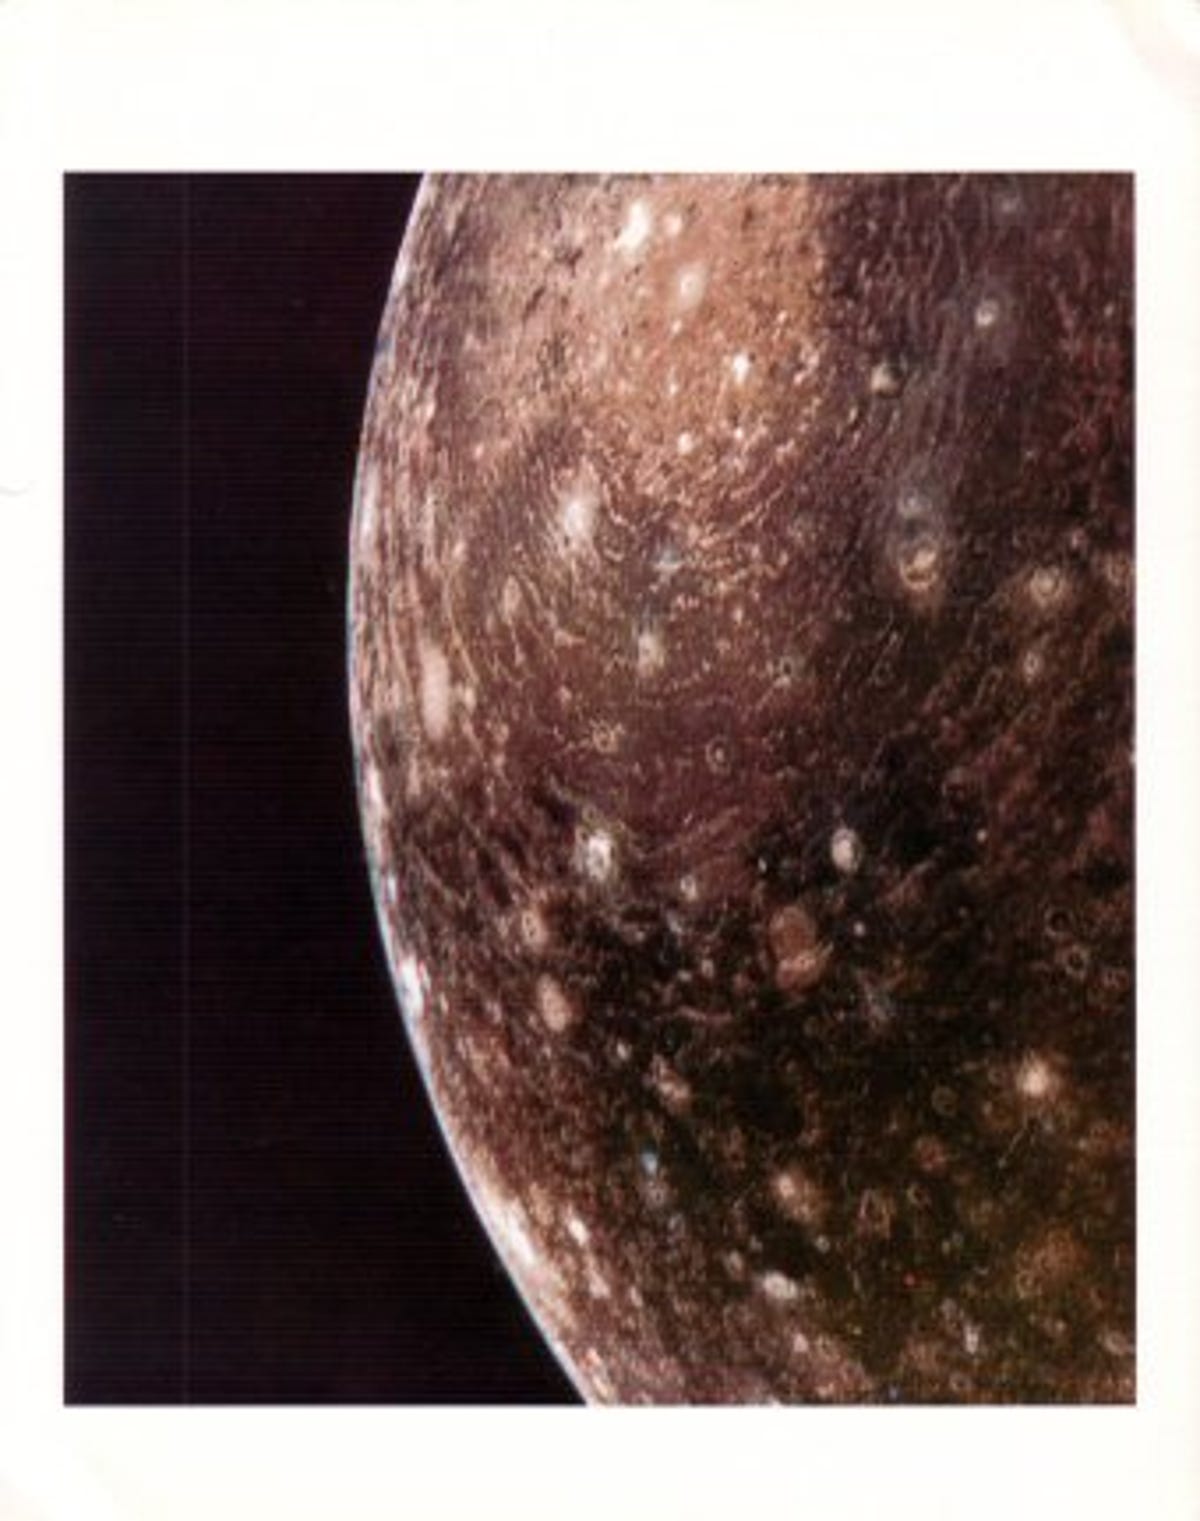 Voyager_1_View_Of_Callisto.jpg